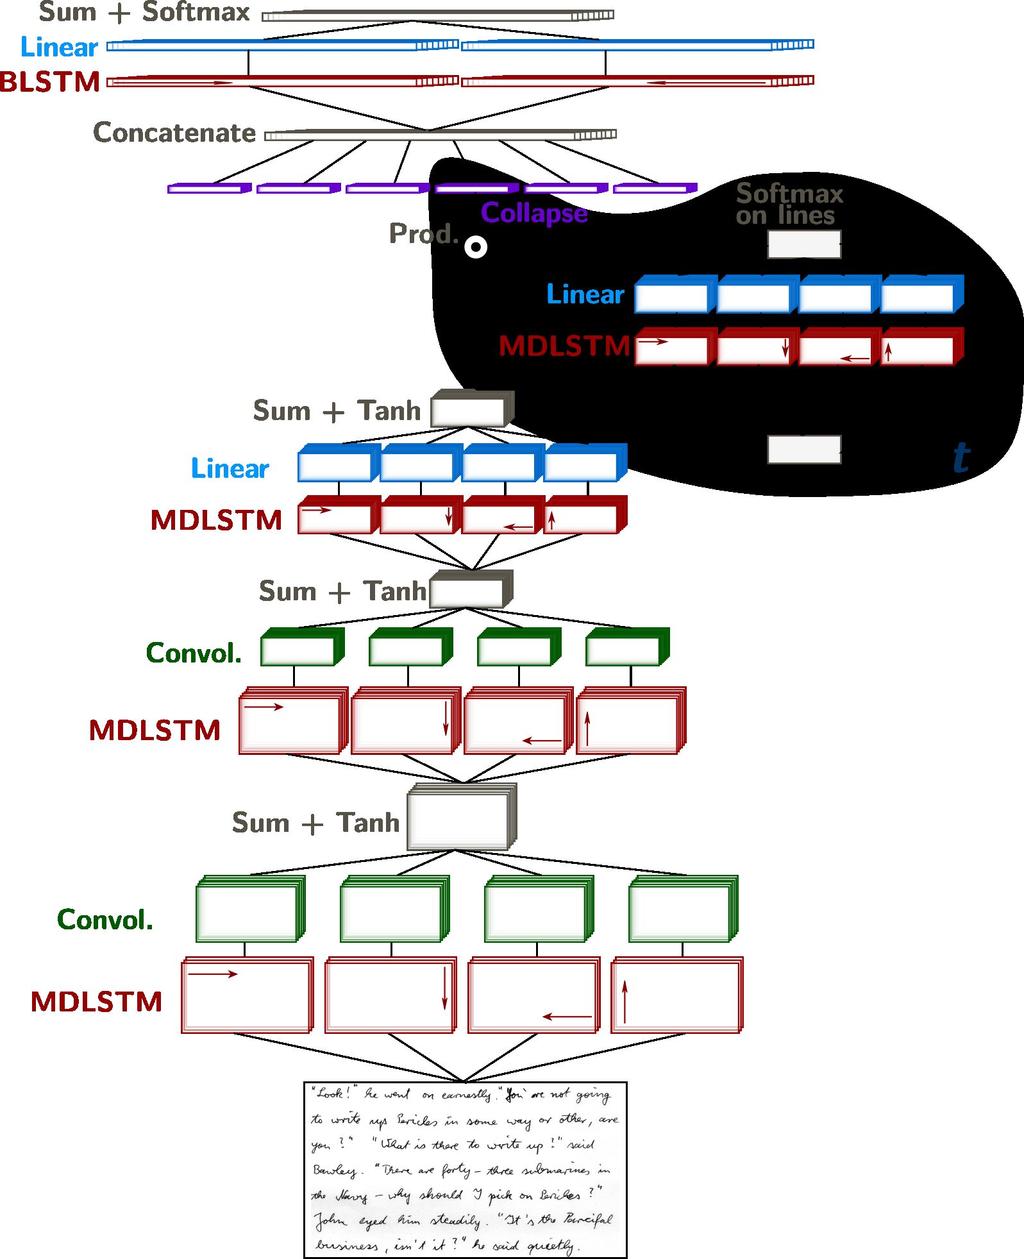 Network s architecture Similar Architecture (encoder,